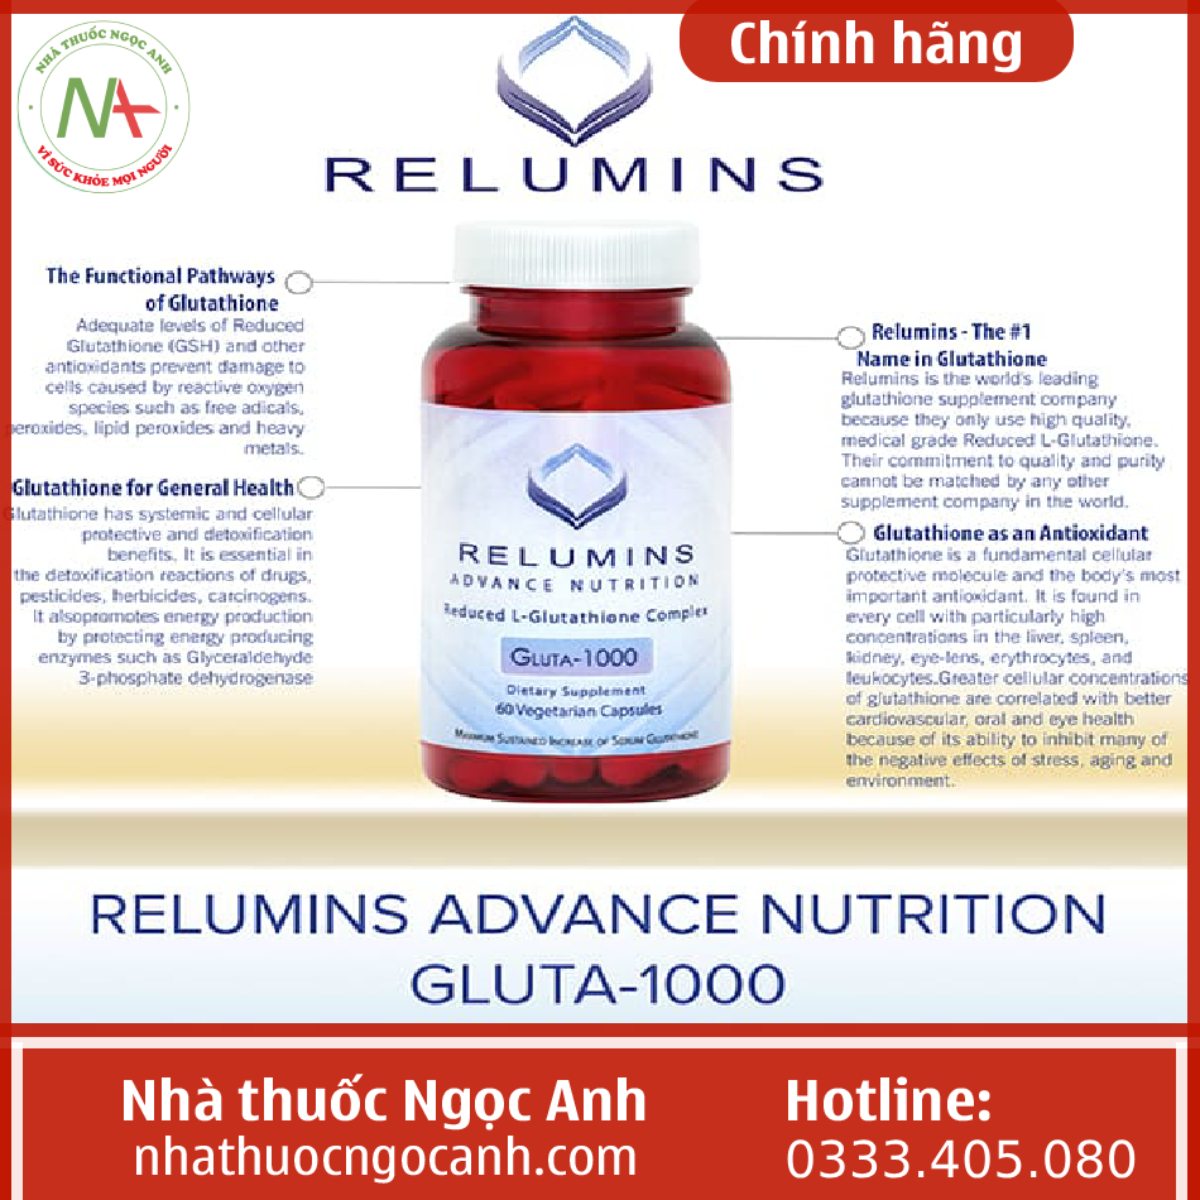 Relumins Advance Nutrition Gluta-1000